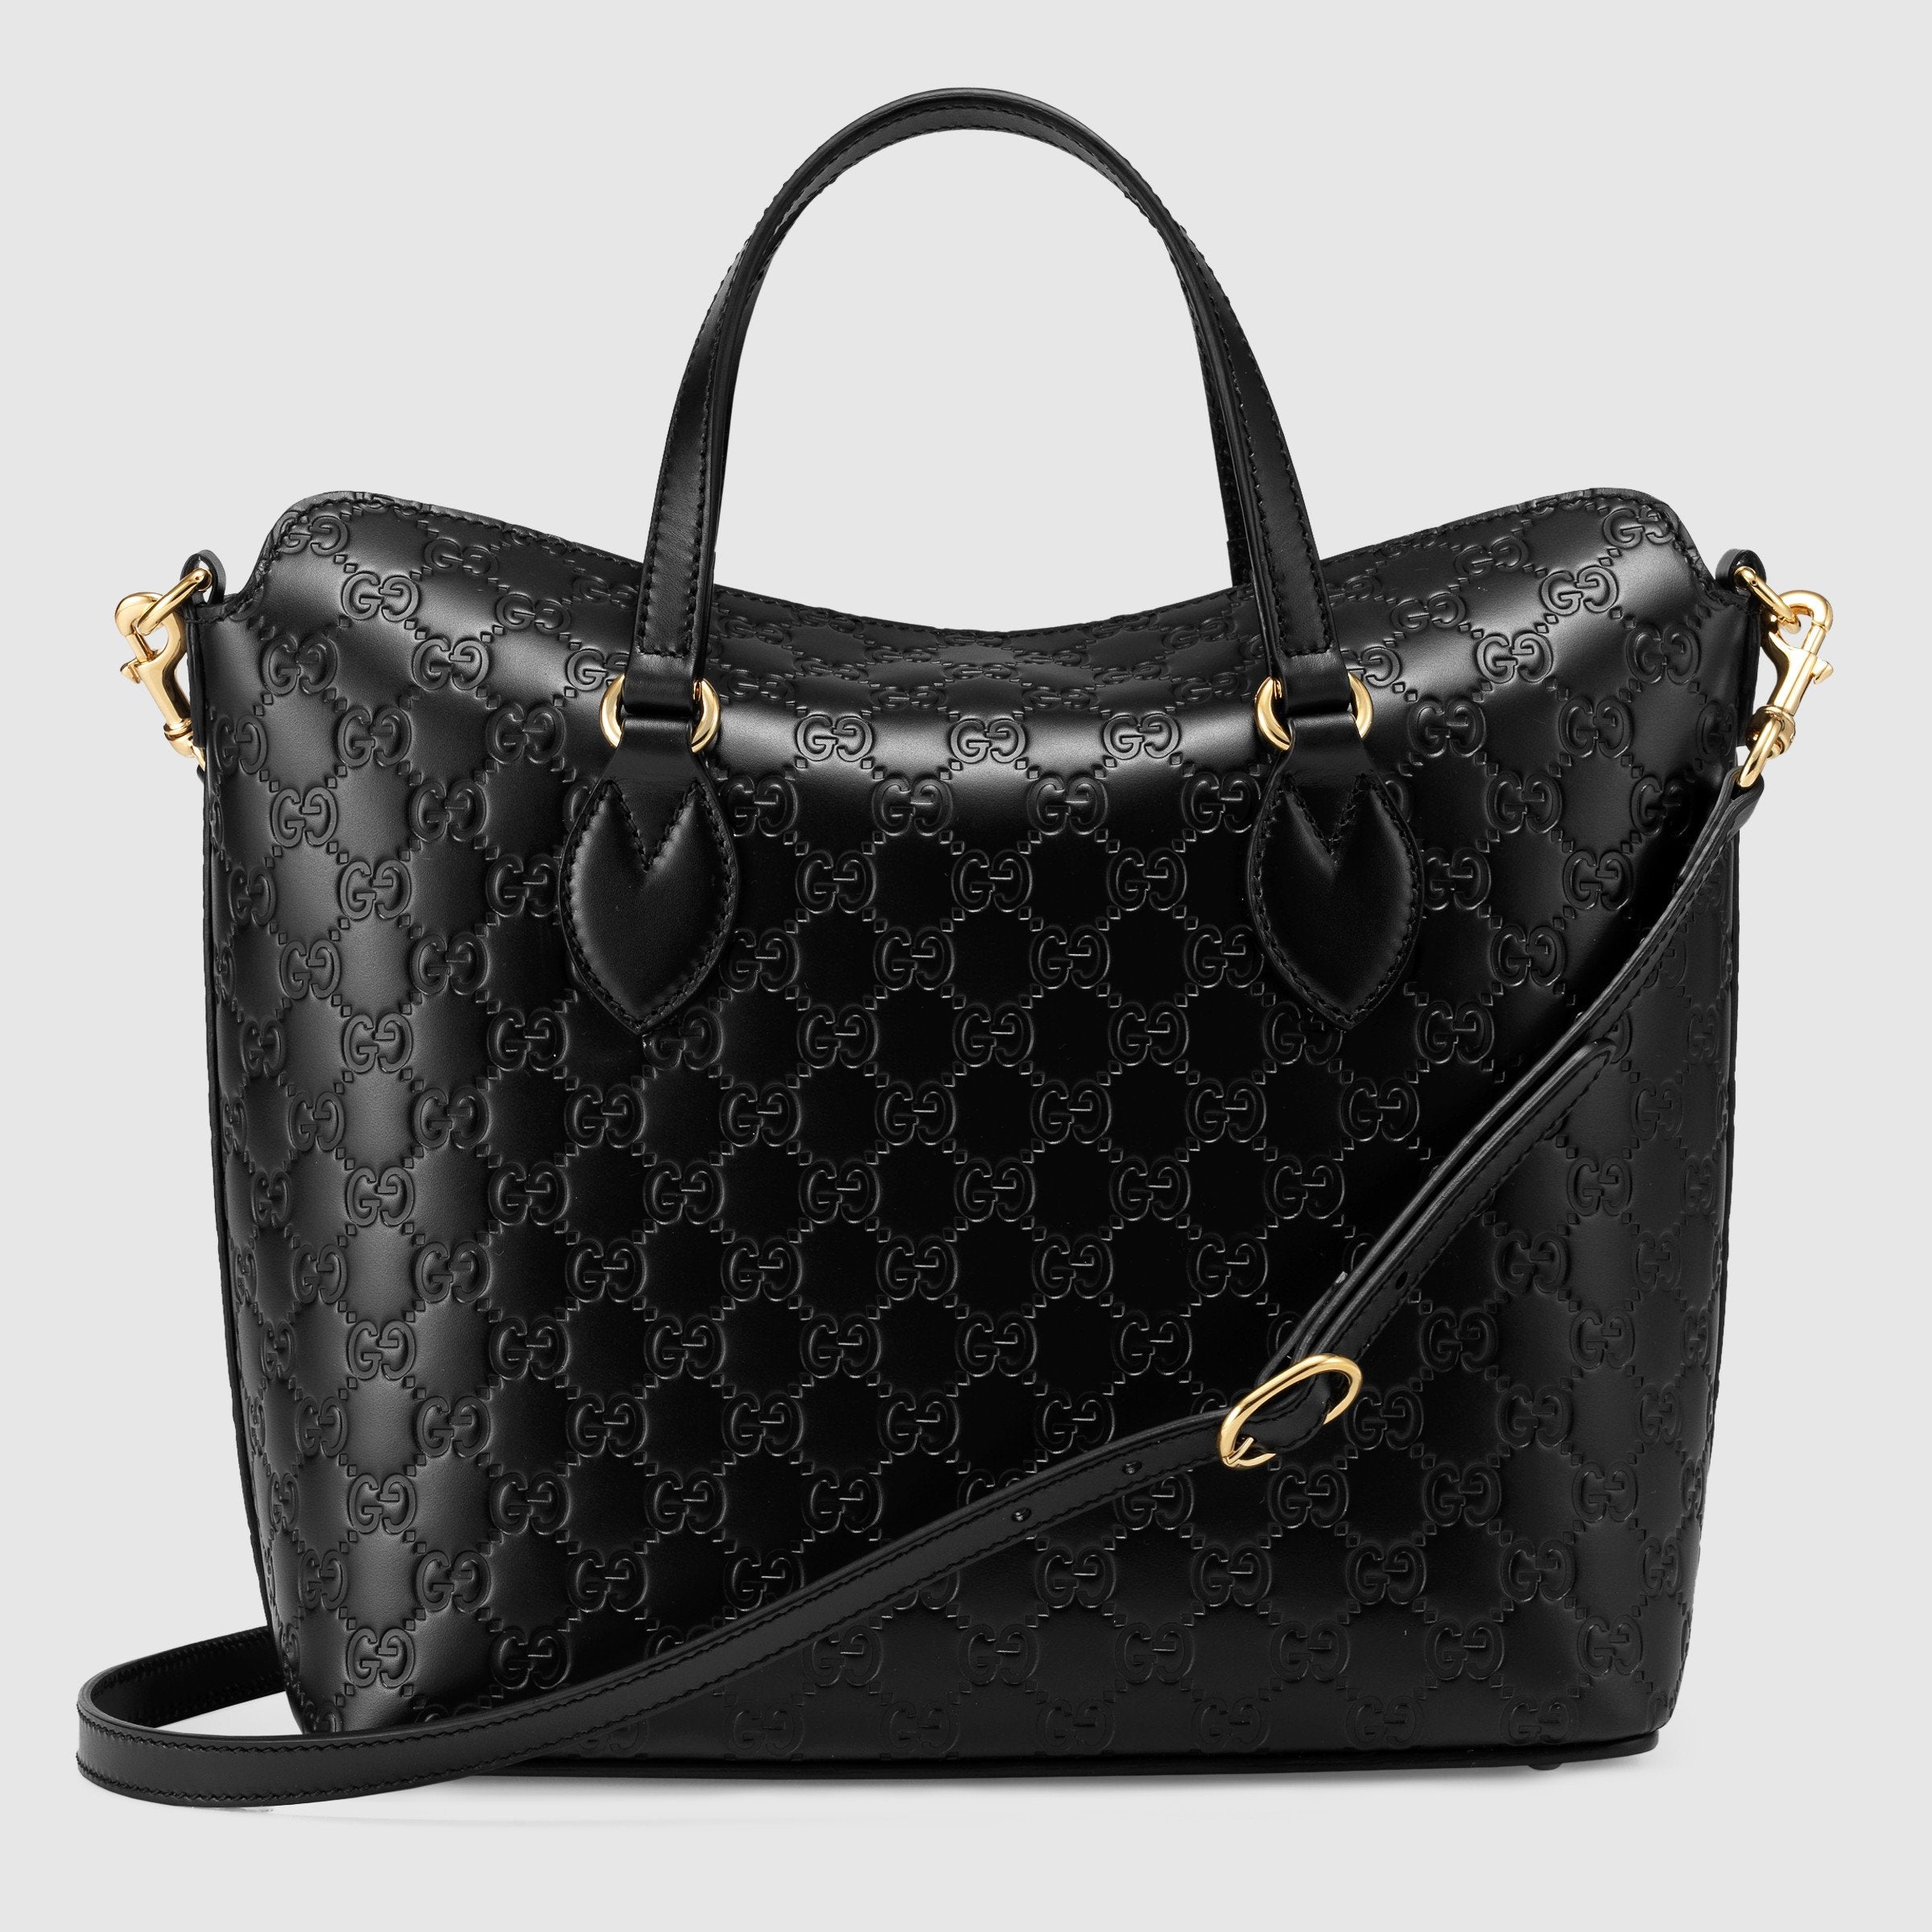 Gucci Signature leather Bag